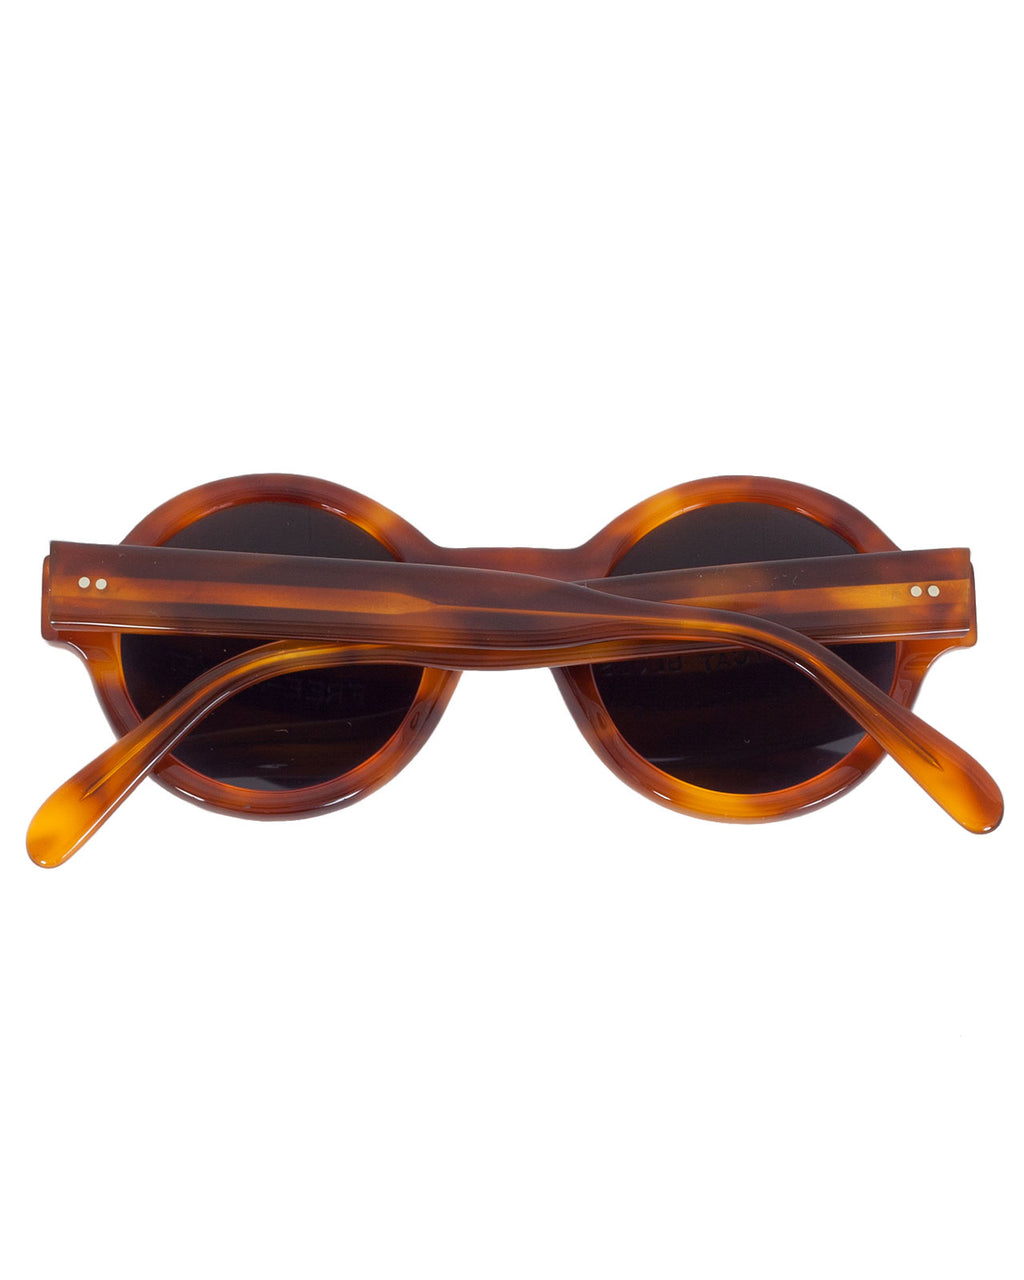 Free-Market Sunglasses, Alleycat Blues, Brown